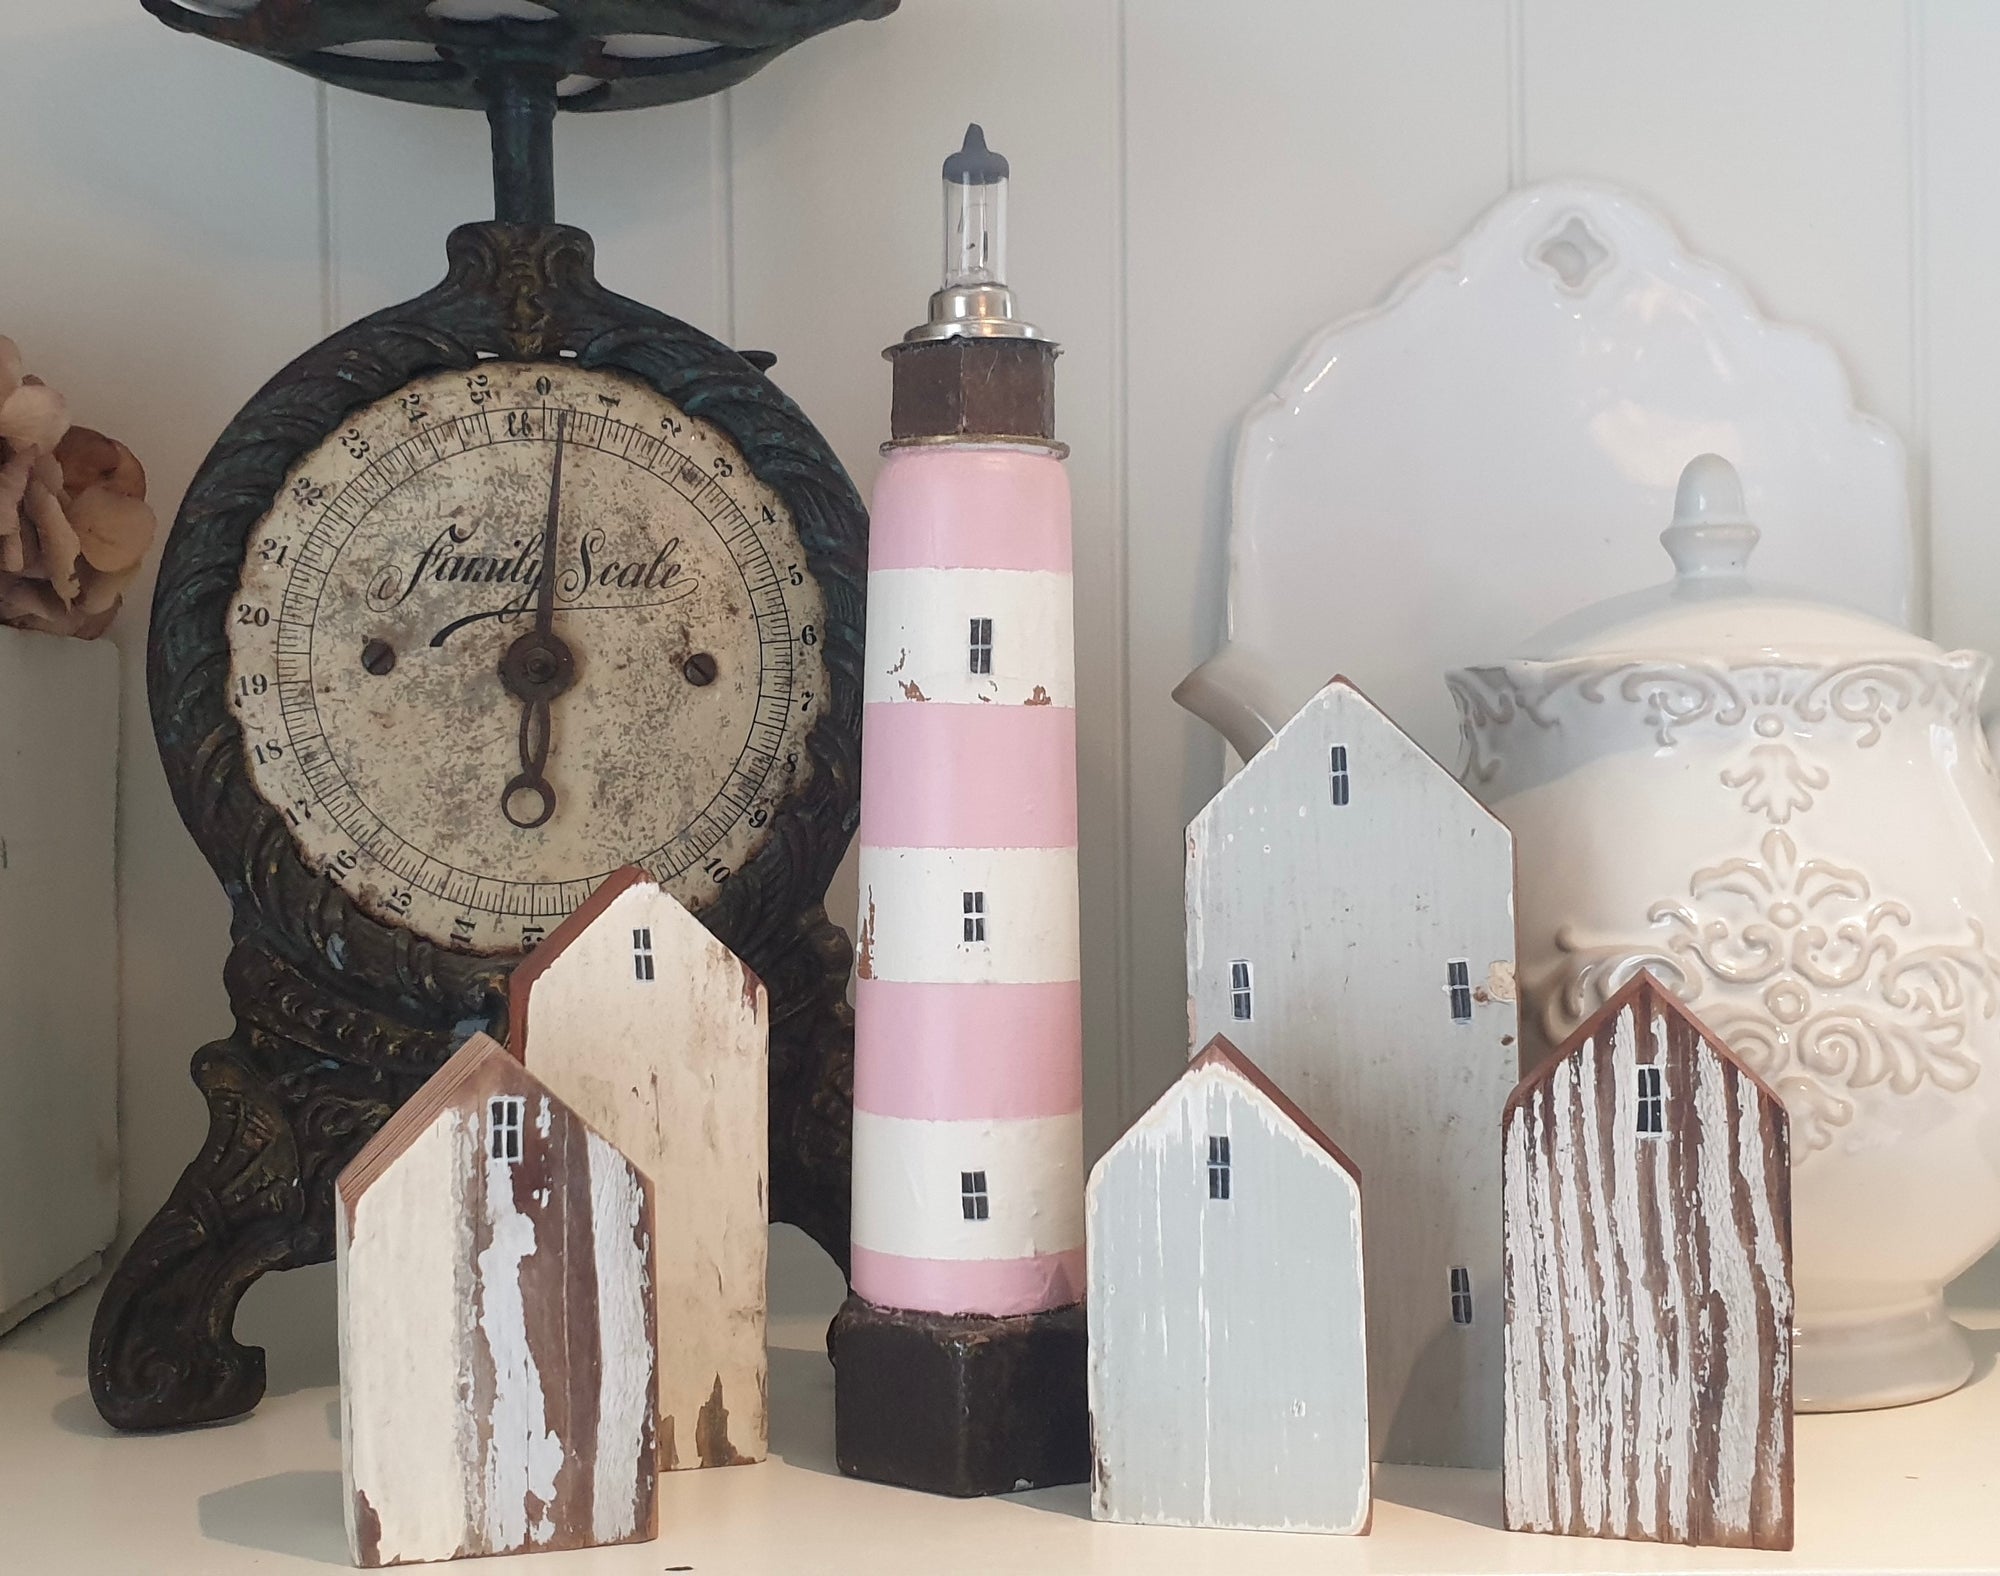 Wooden Lighthouse Set